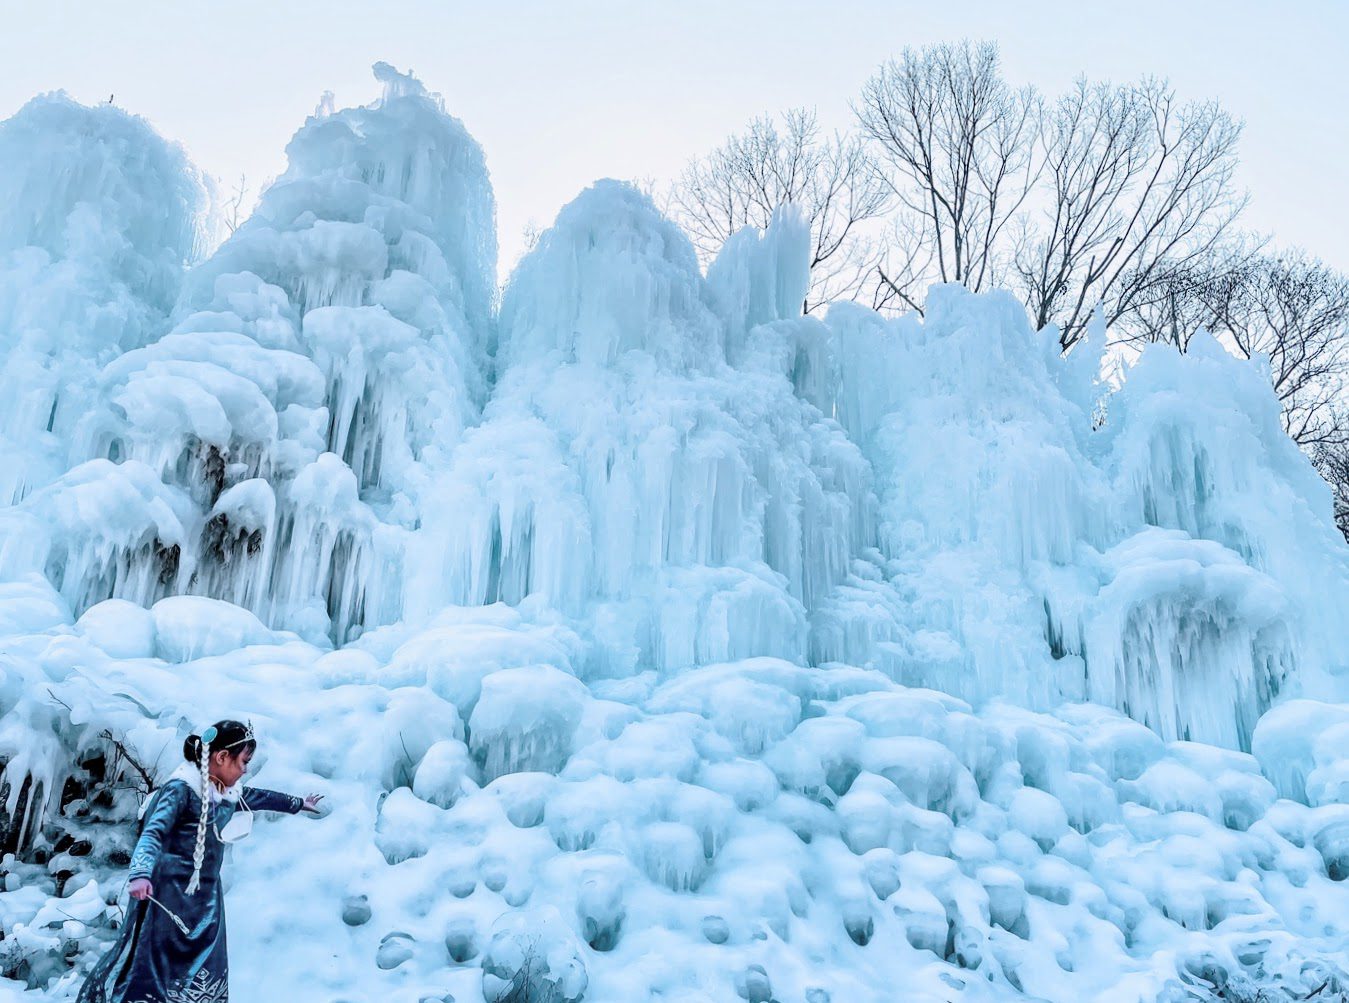 Ice Fountain Festival at Alps Village in Cheongyang, Korea